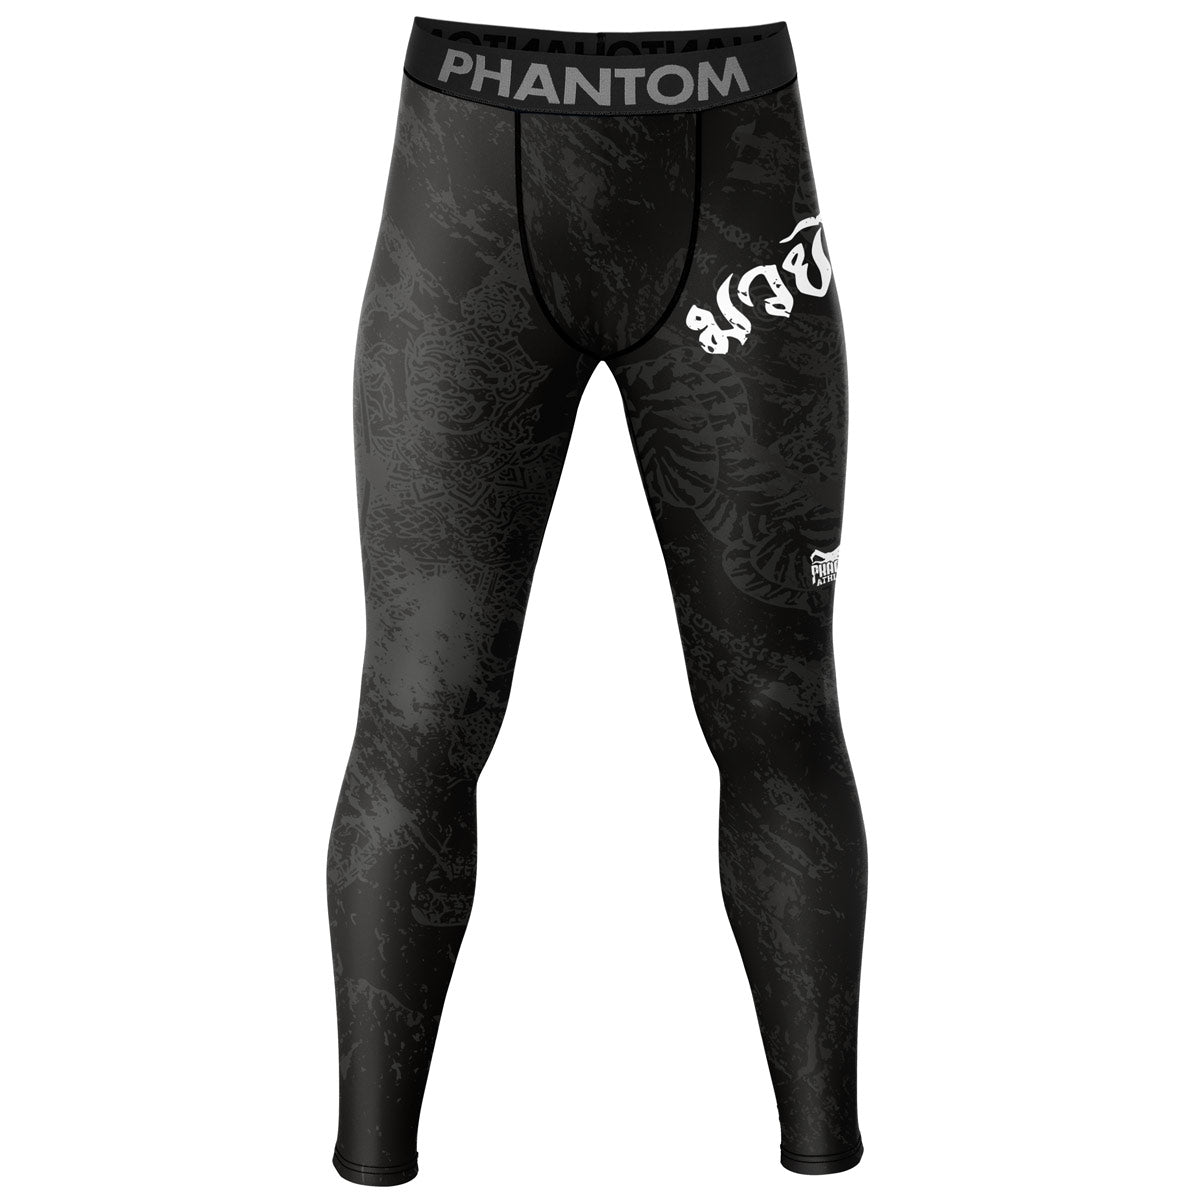 Hawk Sports Mens Compression Pants Base Layer Running Workout Muay Thai Jiu  Jitsu MMA BJJ Spats Leggings Tights for Men (Black, 34'' Waist) 